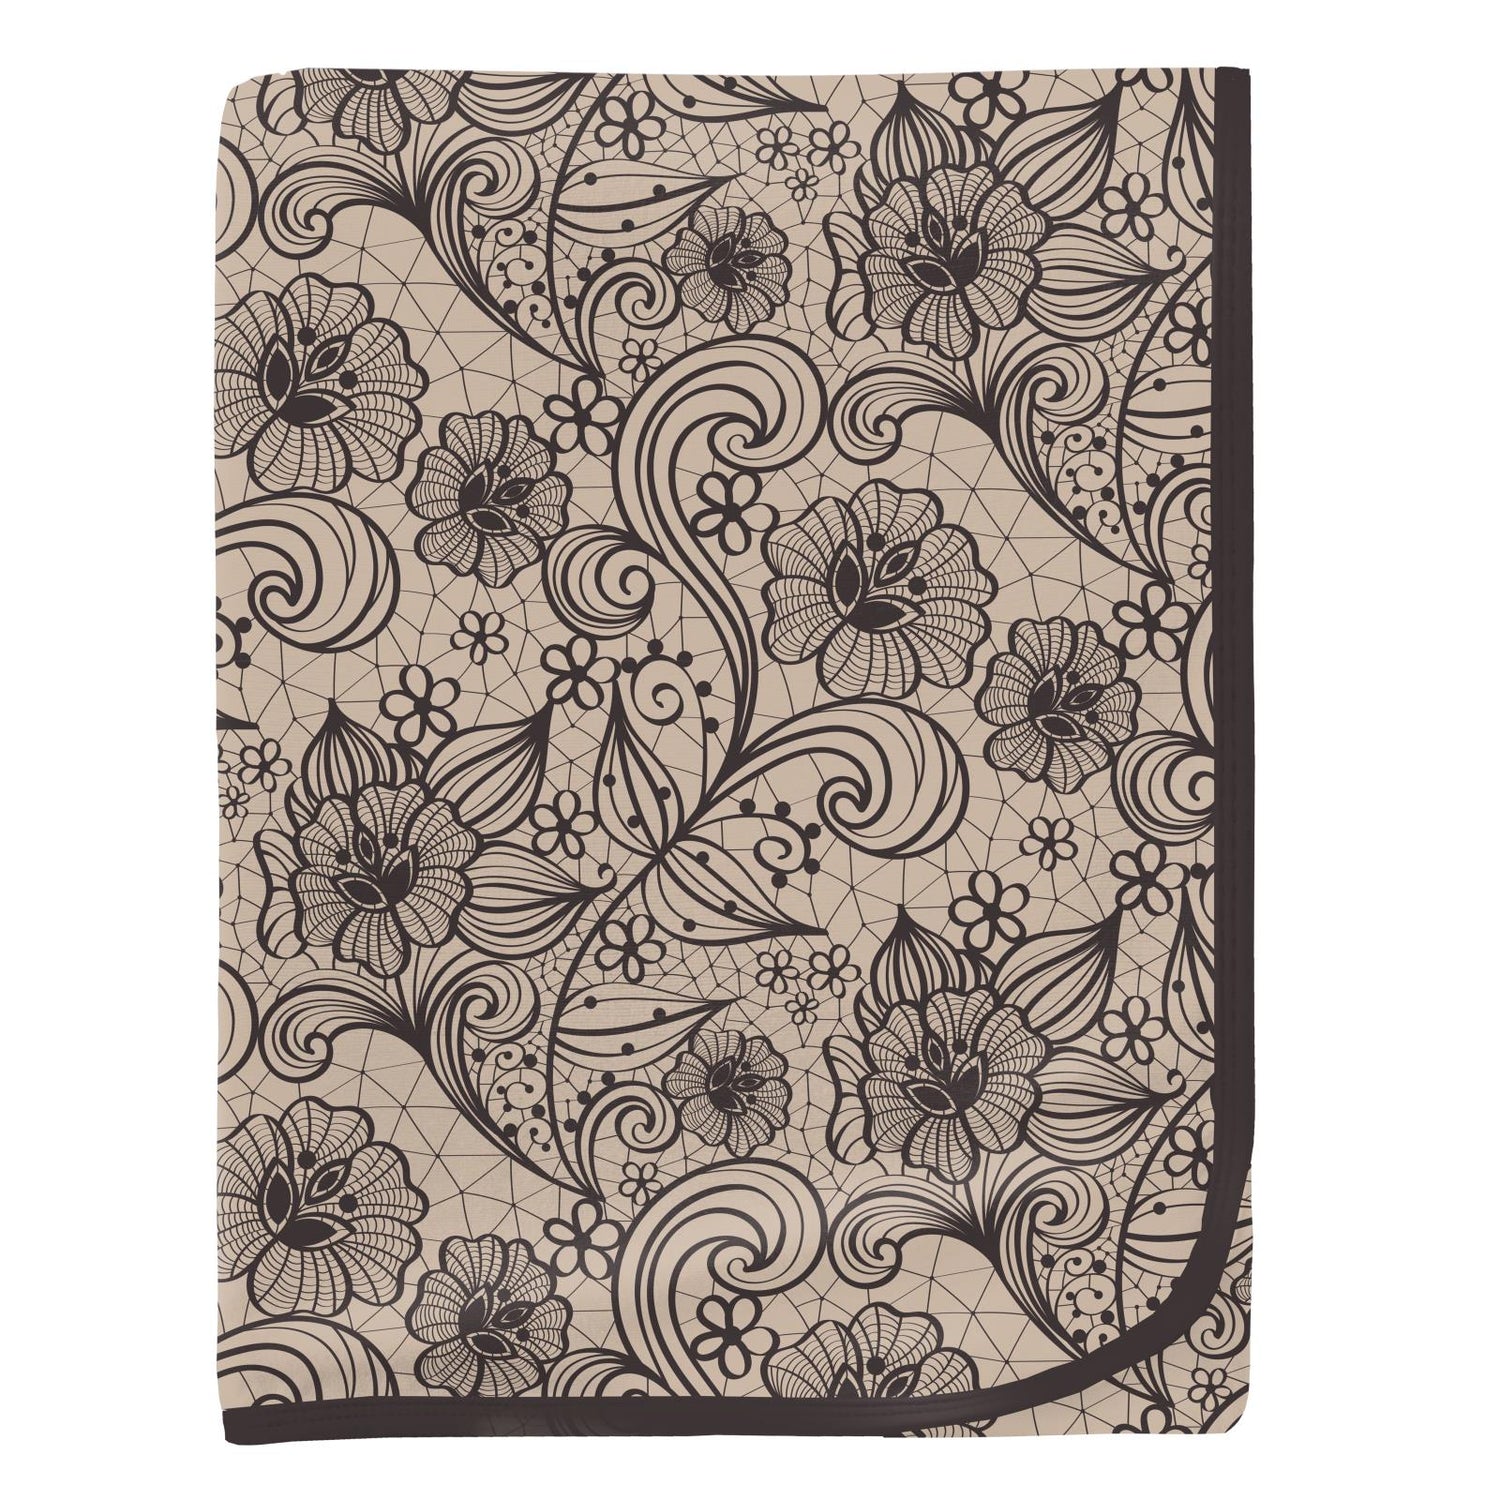 Print Swaddling Blanket in Burlap Lace